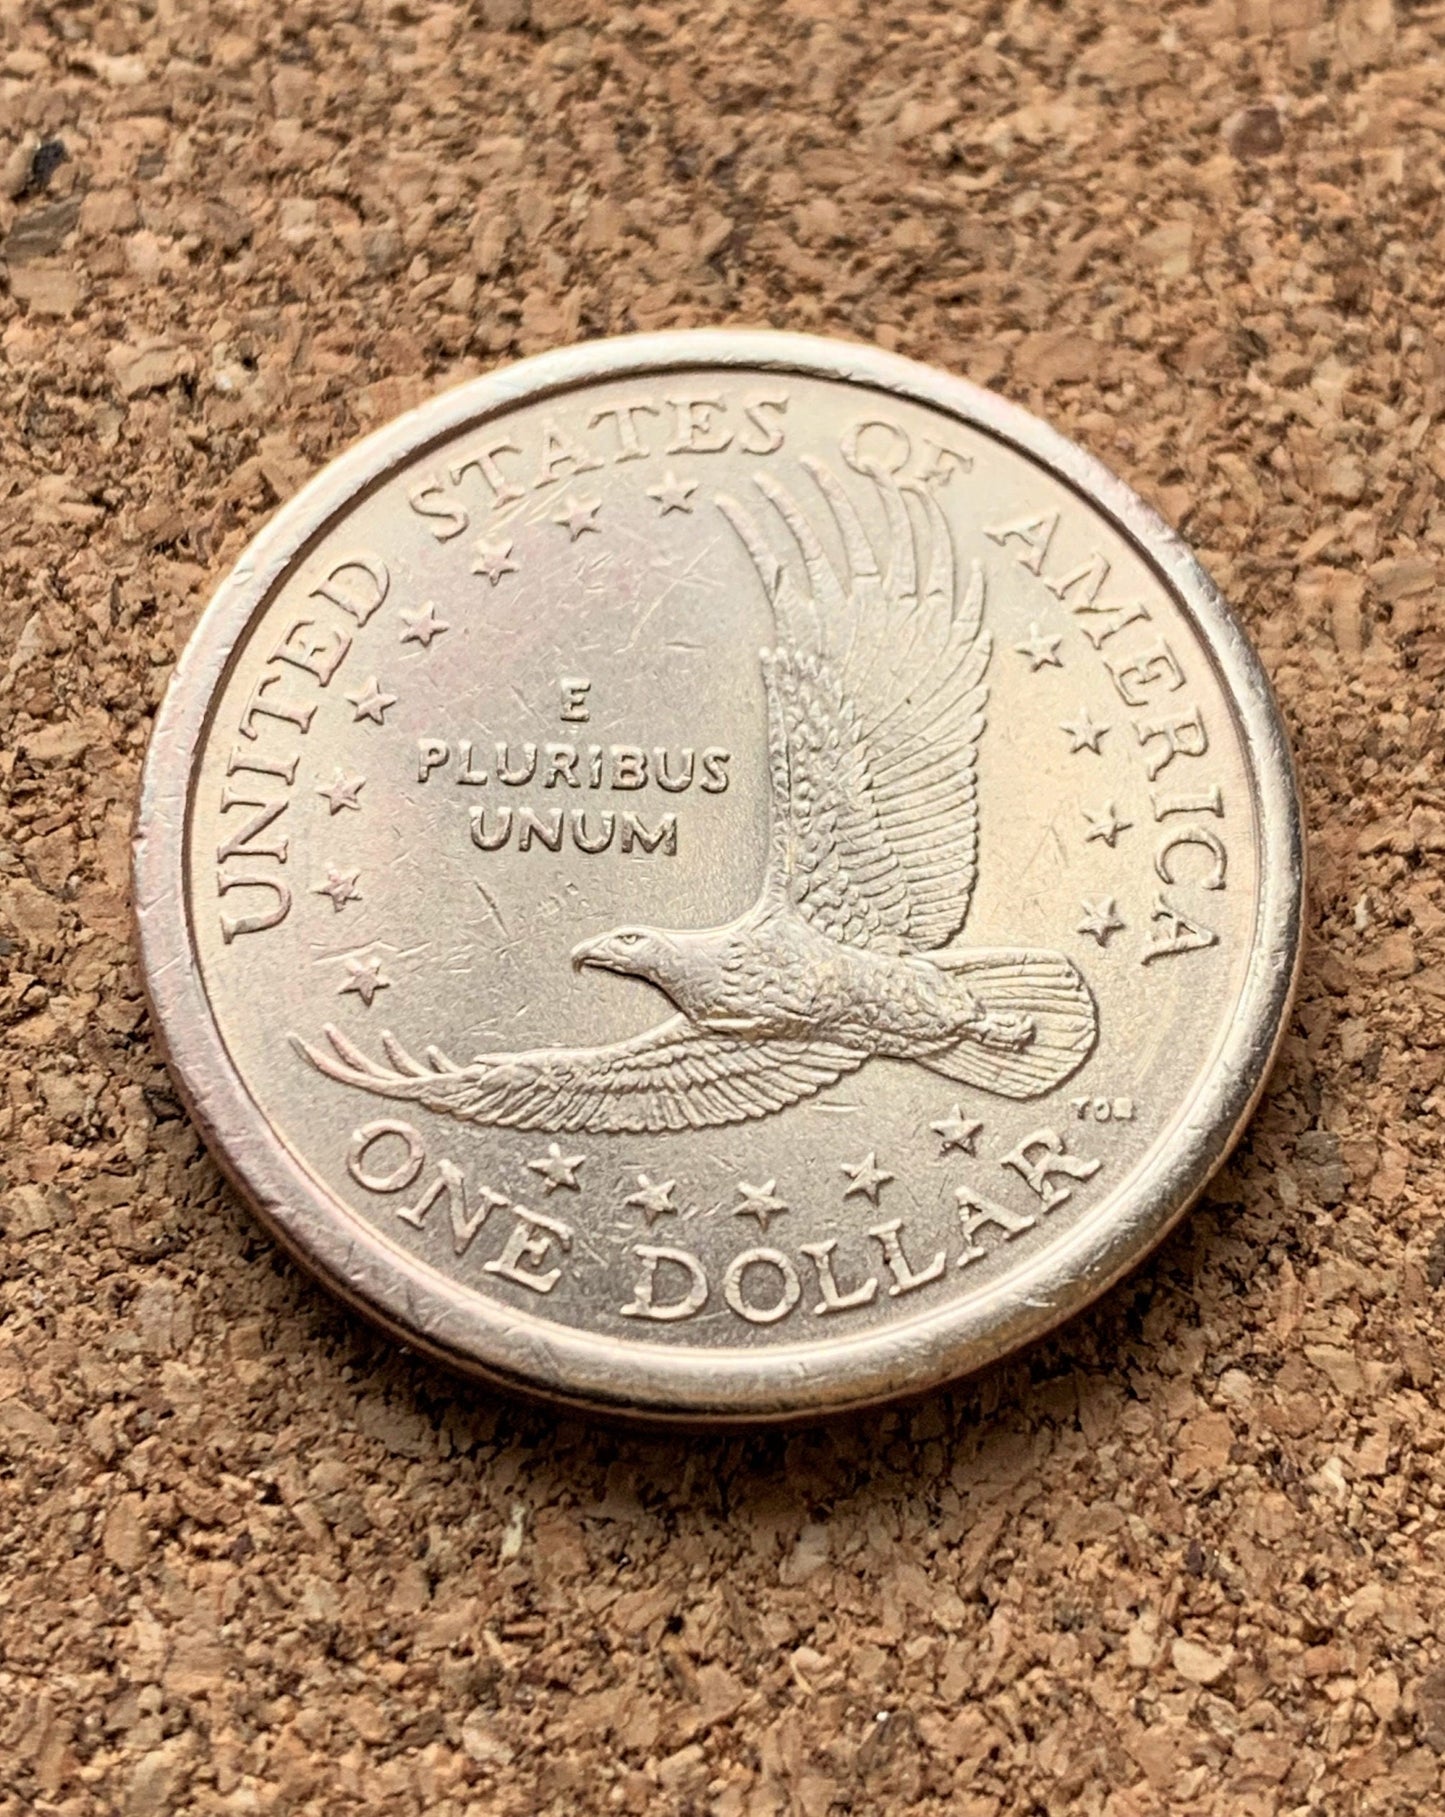 Sacagawea Dollar 2001 D   Denver Mint